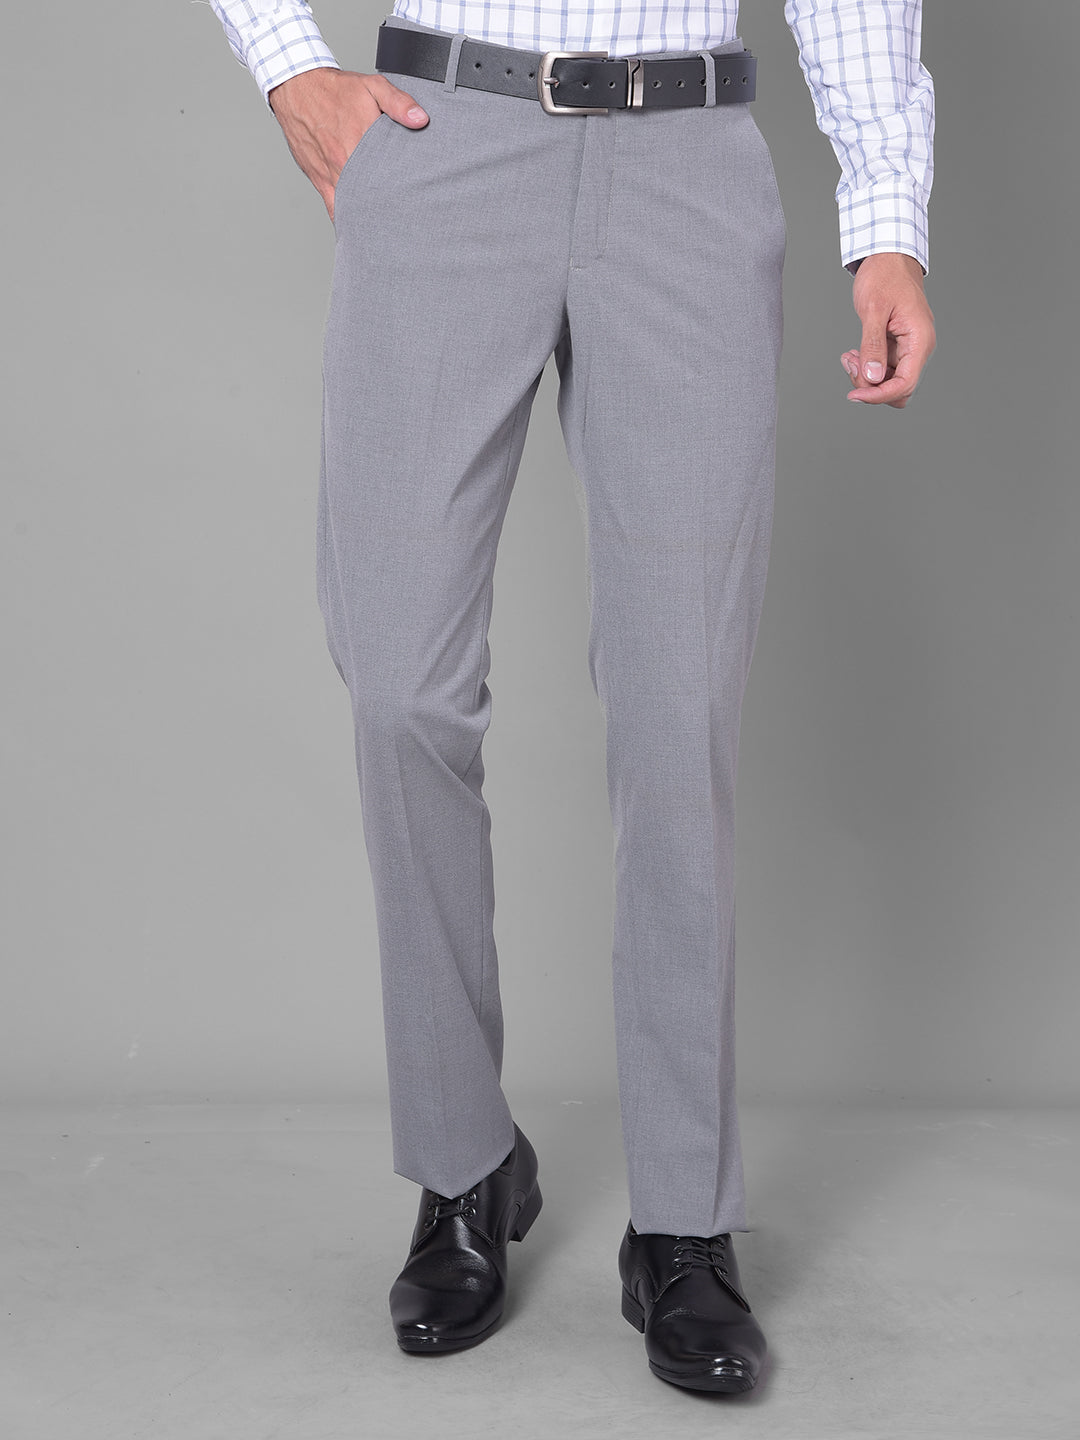 Cotton Grey Formal Pant at Rs 135 in Delhi